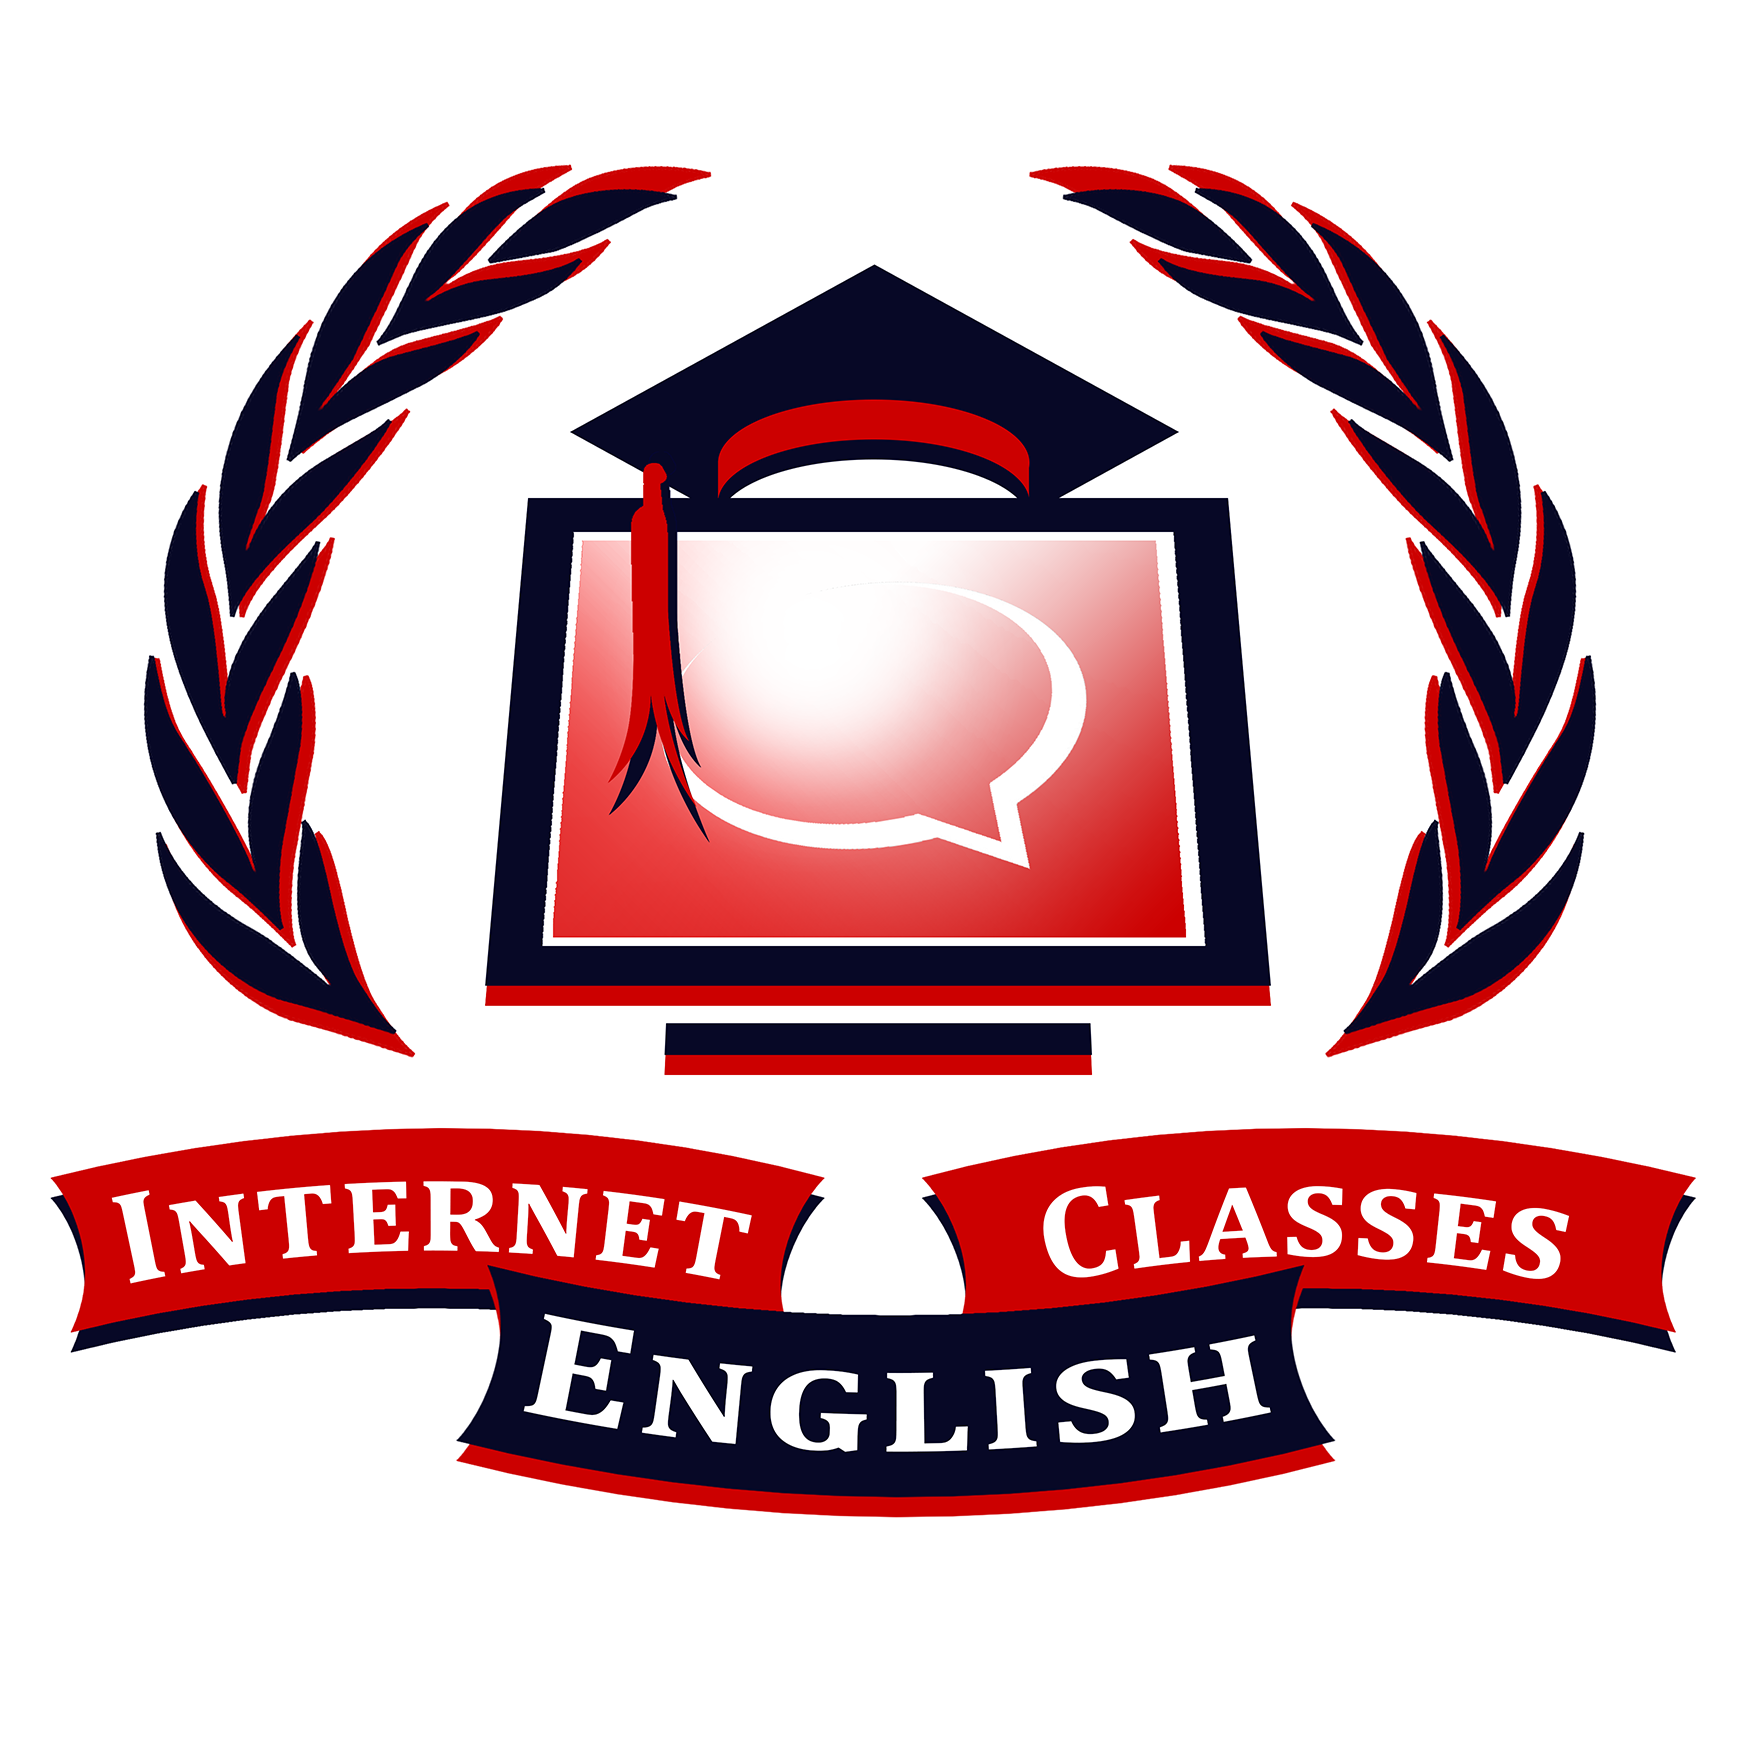 Internet English Classes Ltd